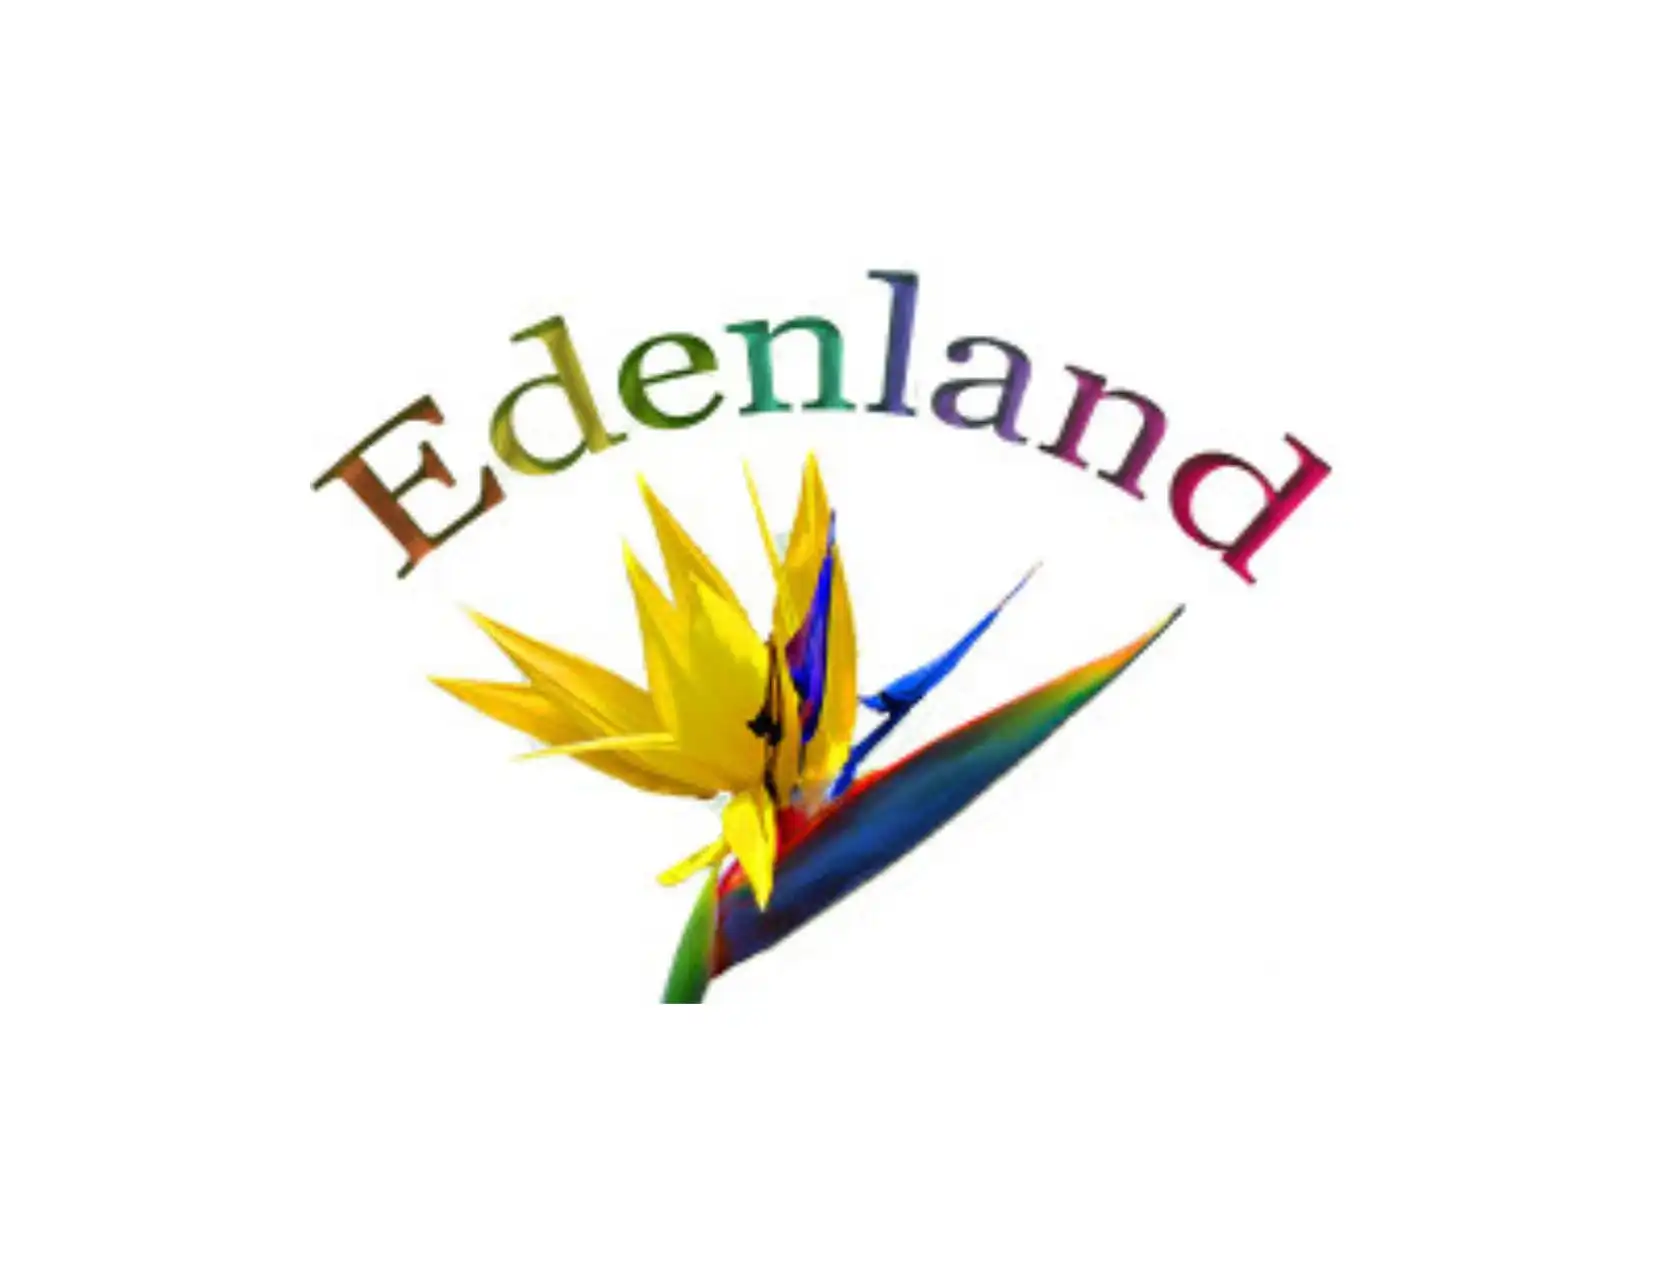 Новый сайт Edenland запущен.